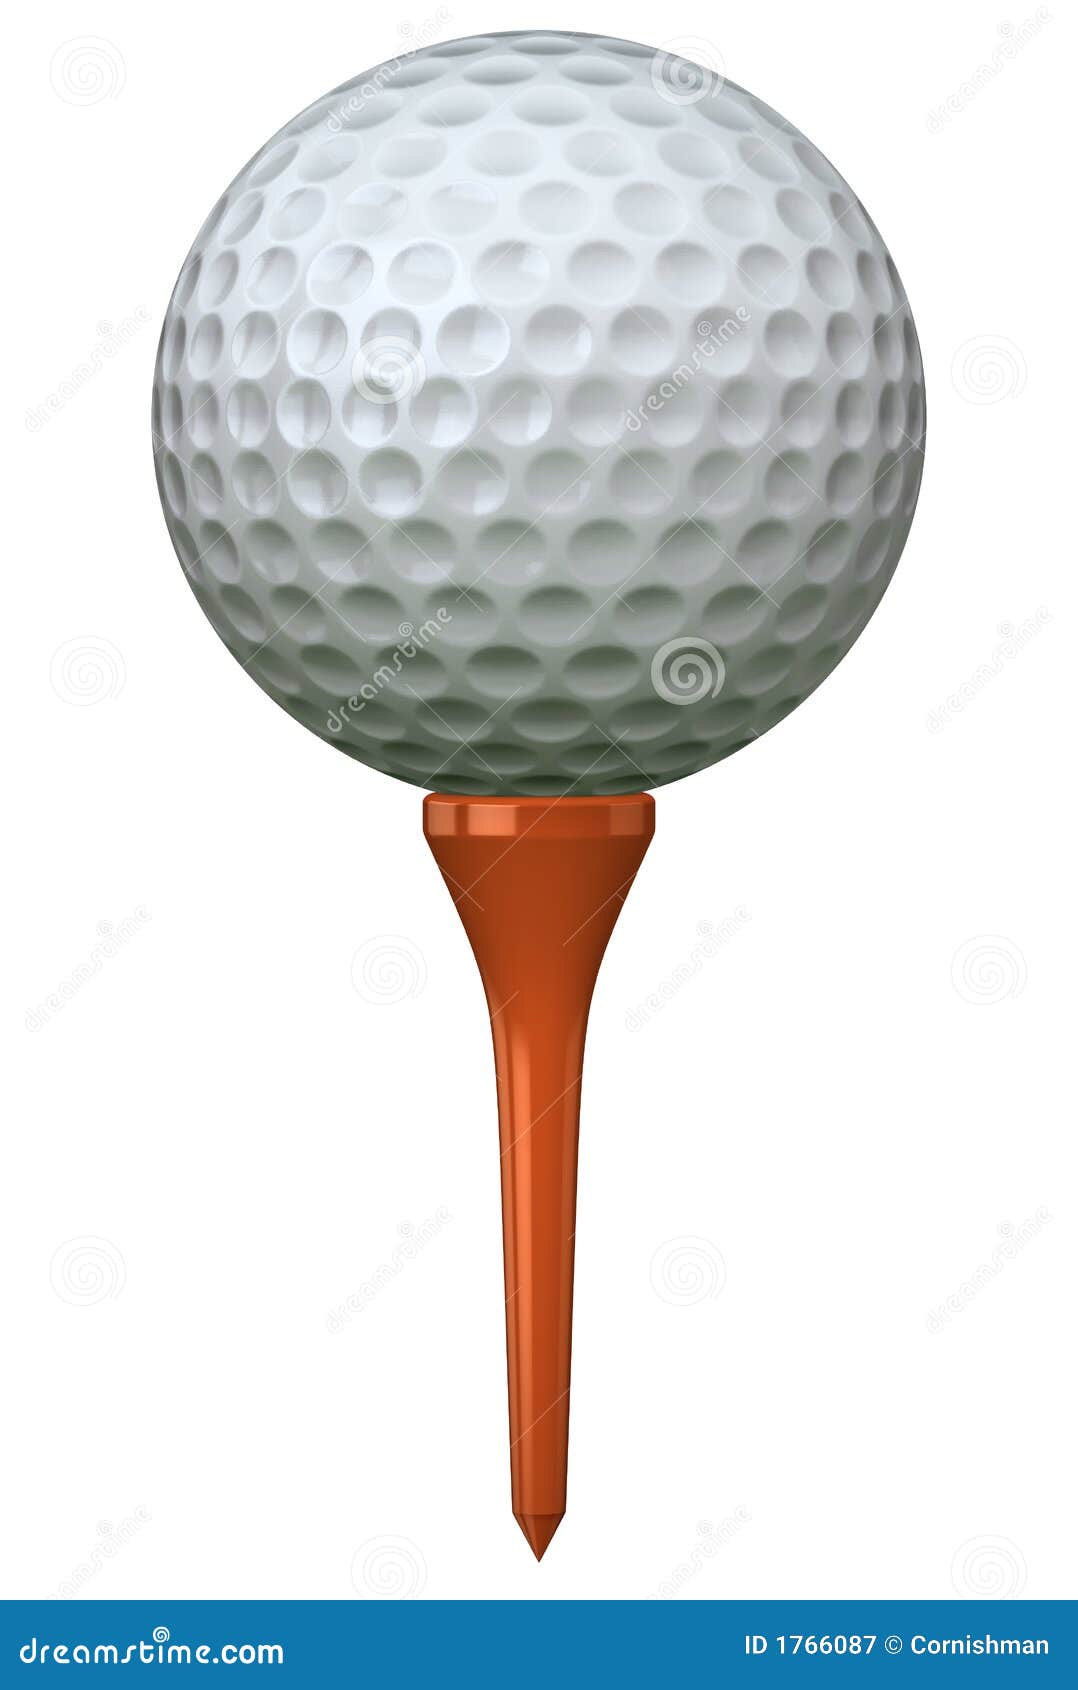 golf ball on tee